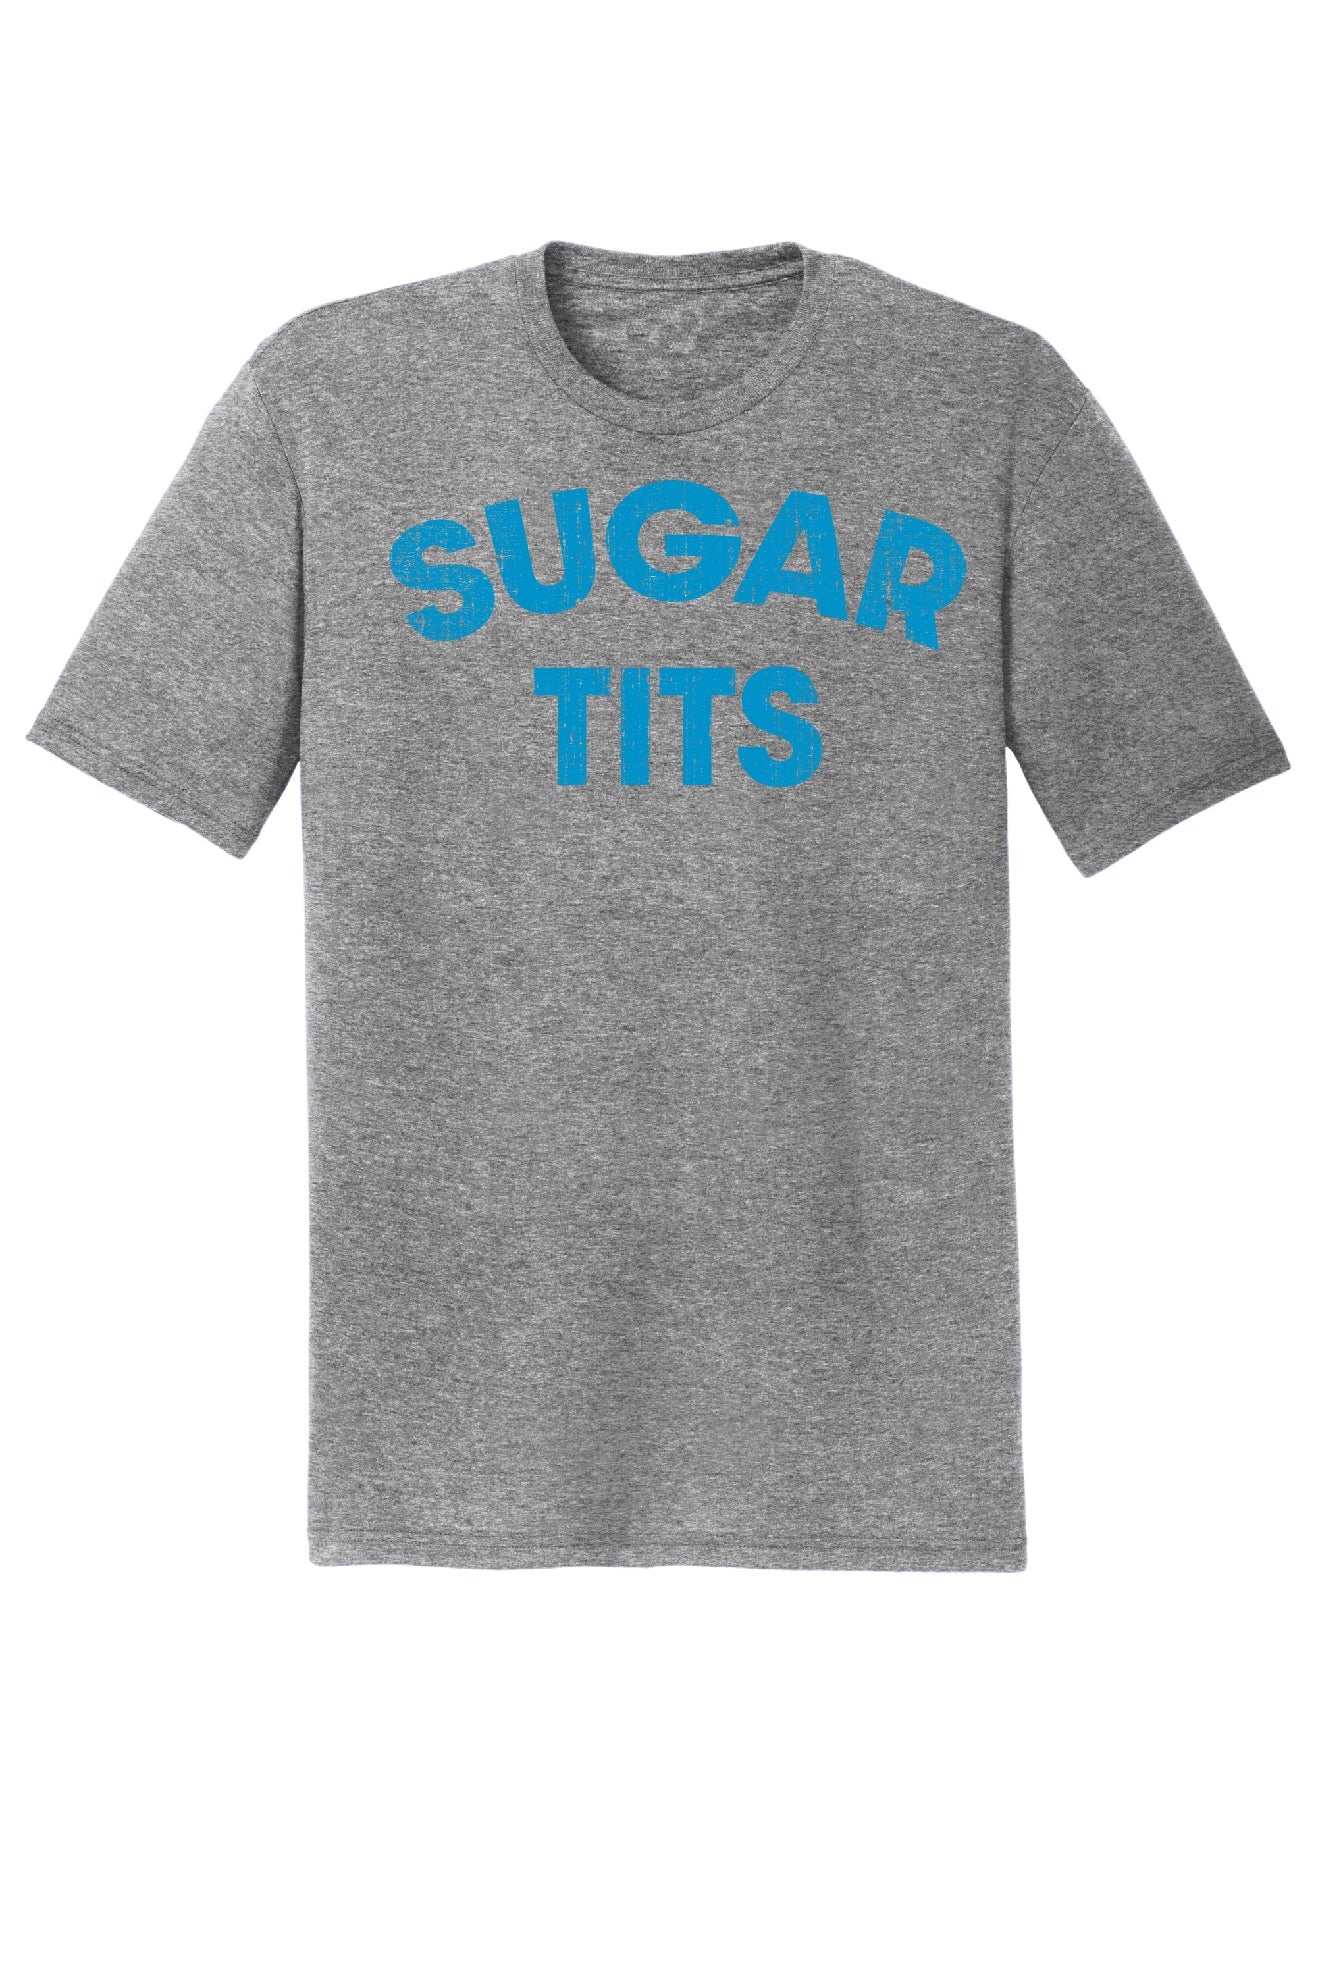 Sugar Tits Tee